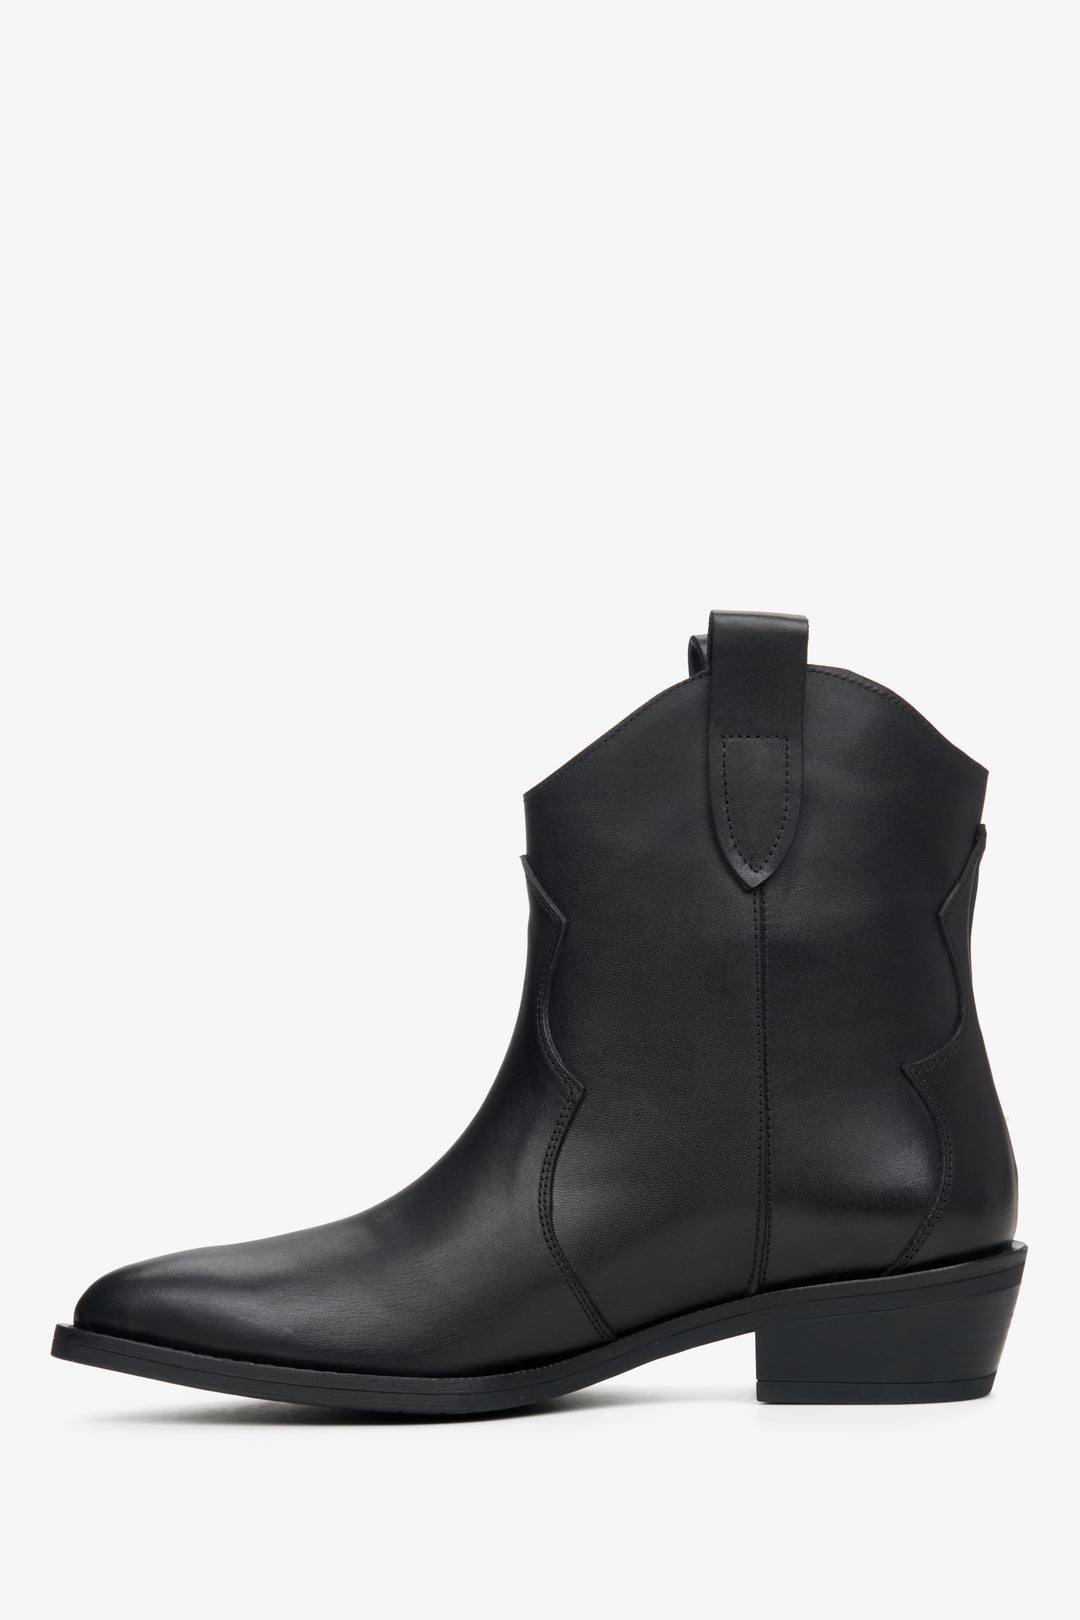 Women's black cowboy boots in genuine leather by Estro - shoe profile.